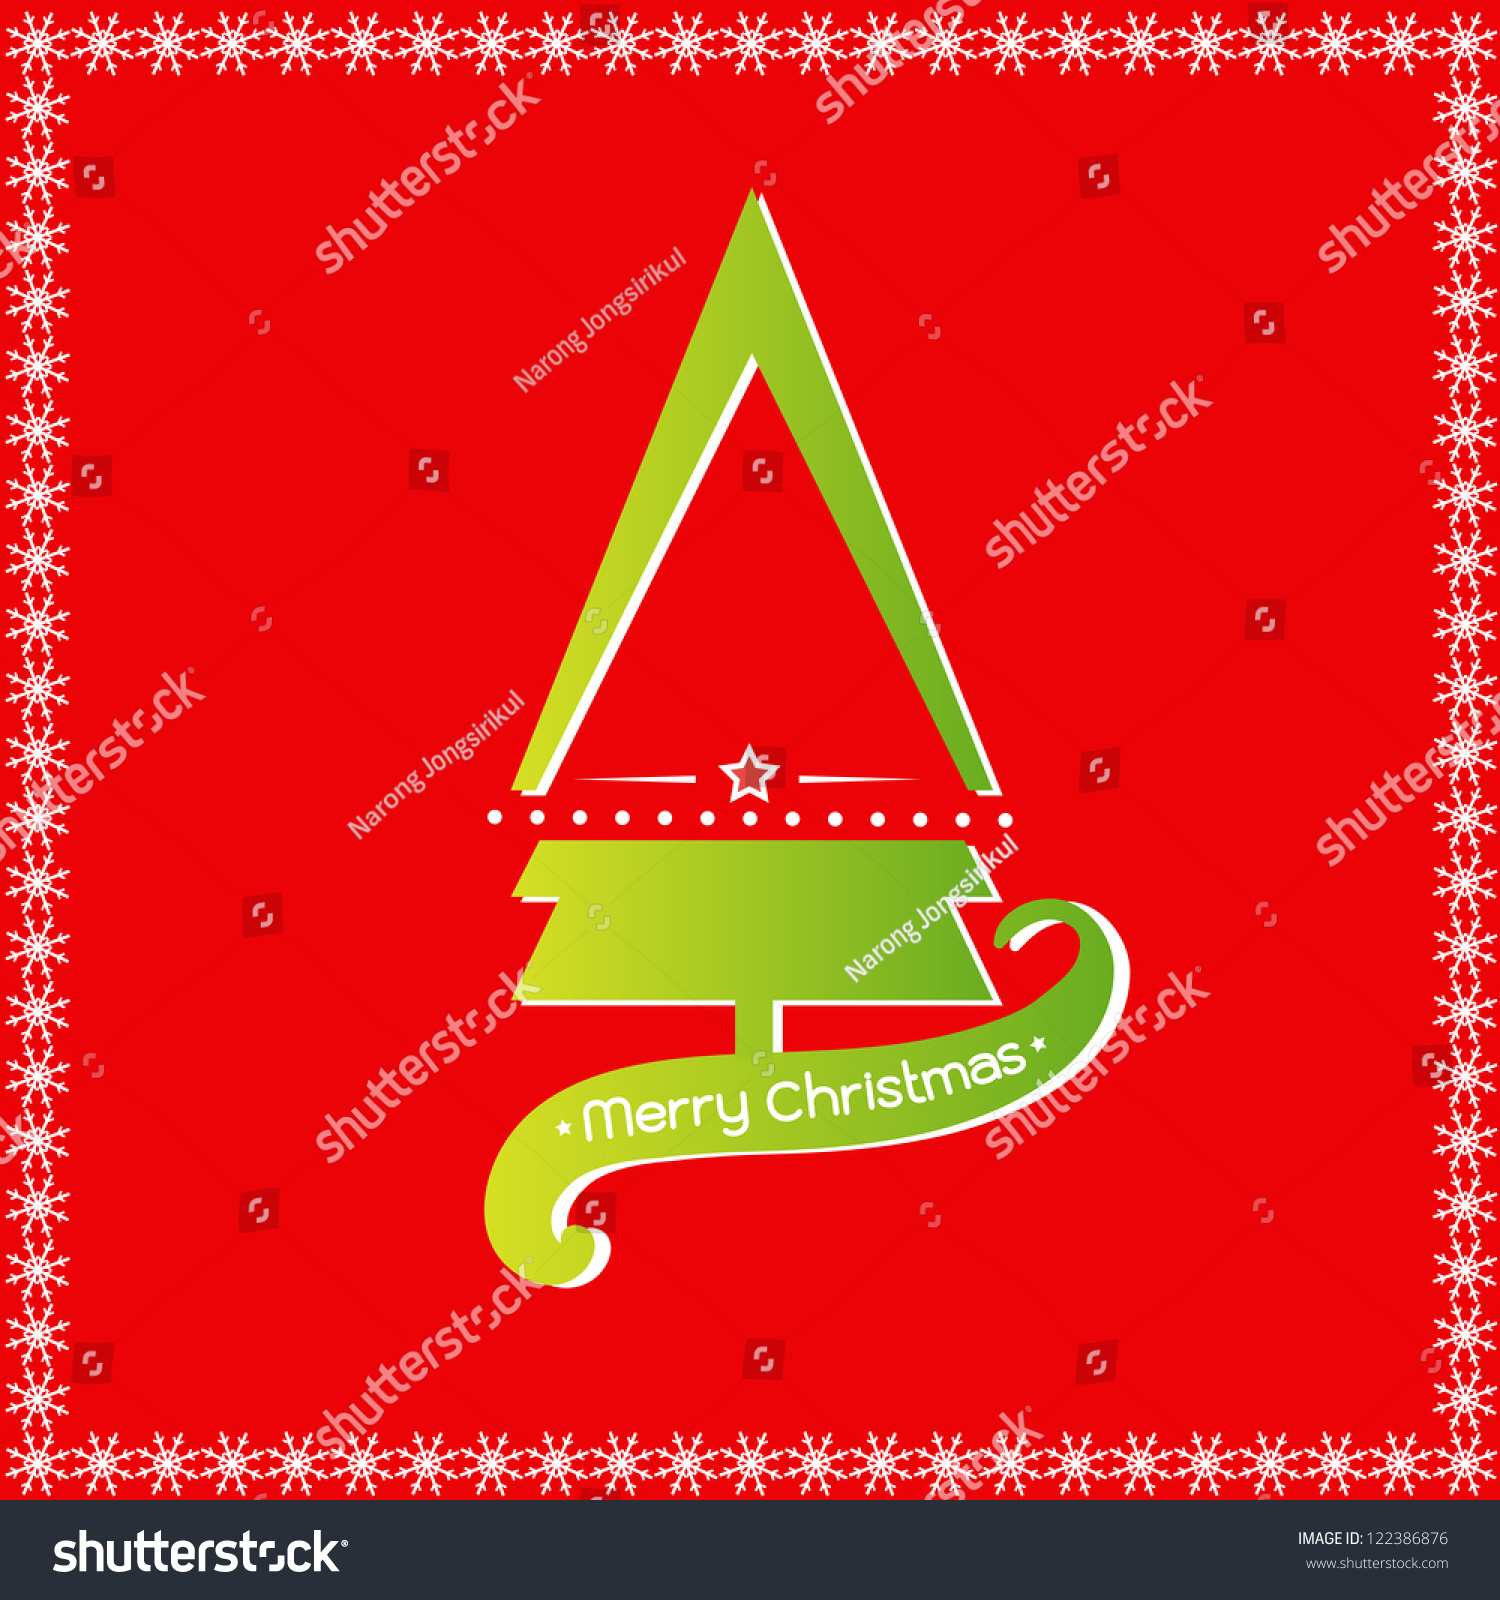 Merry Christmas Greeting Card, Vector Illustration - 122386876 ...